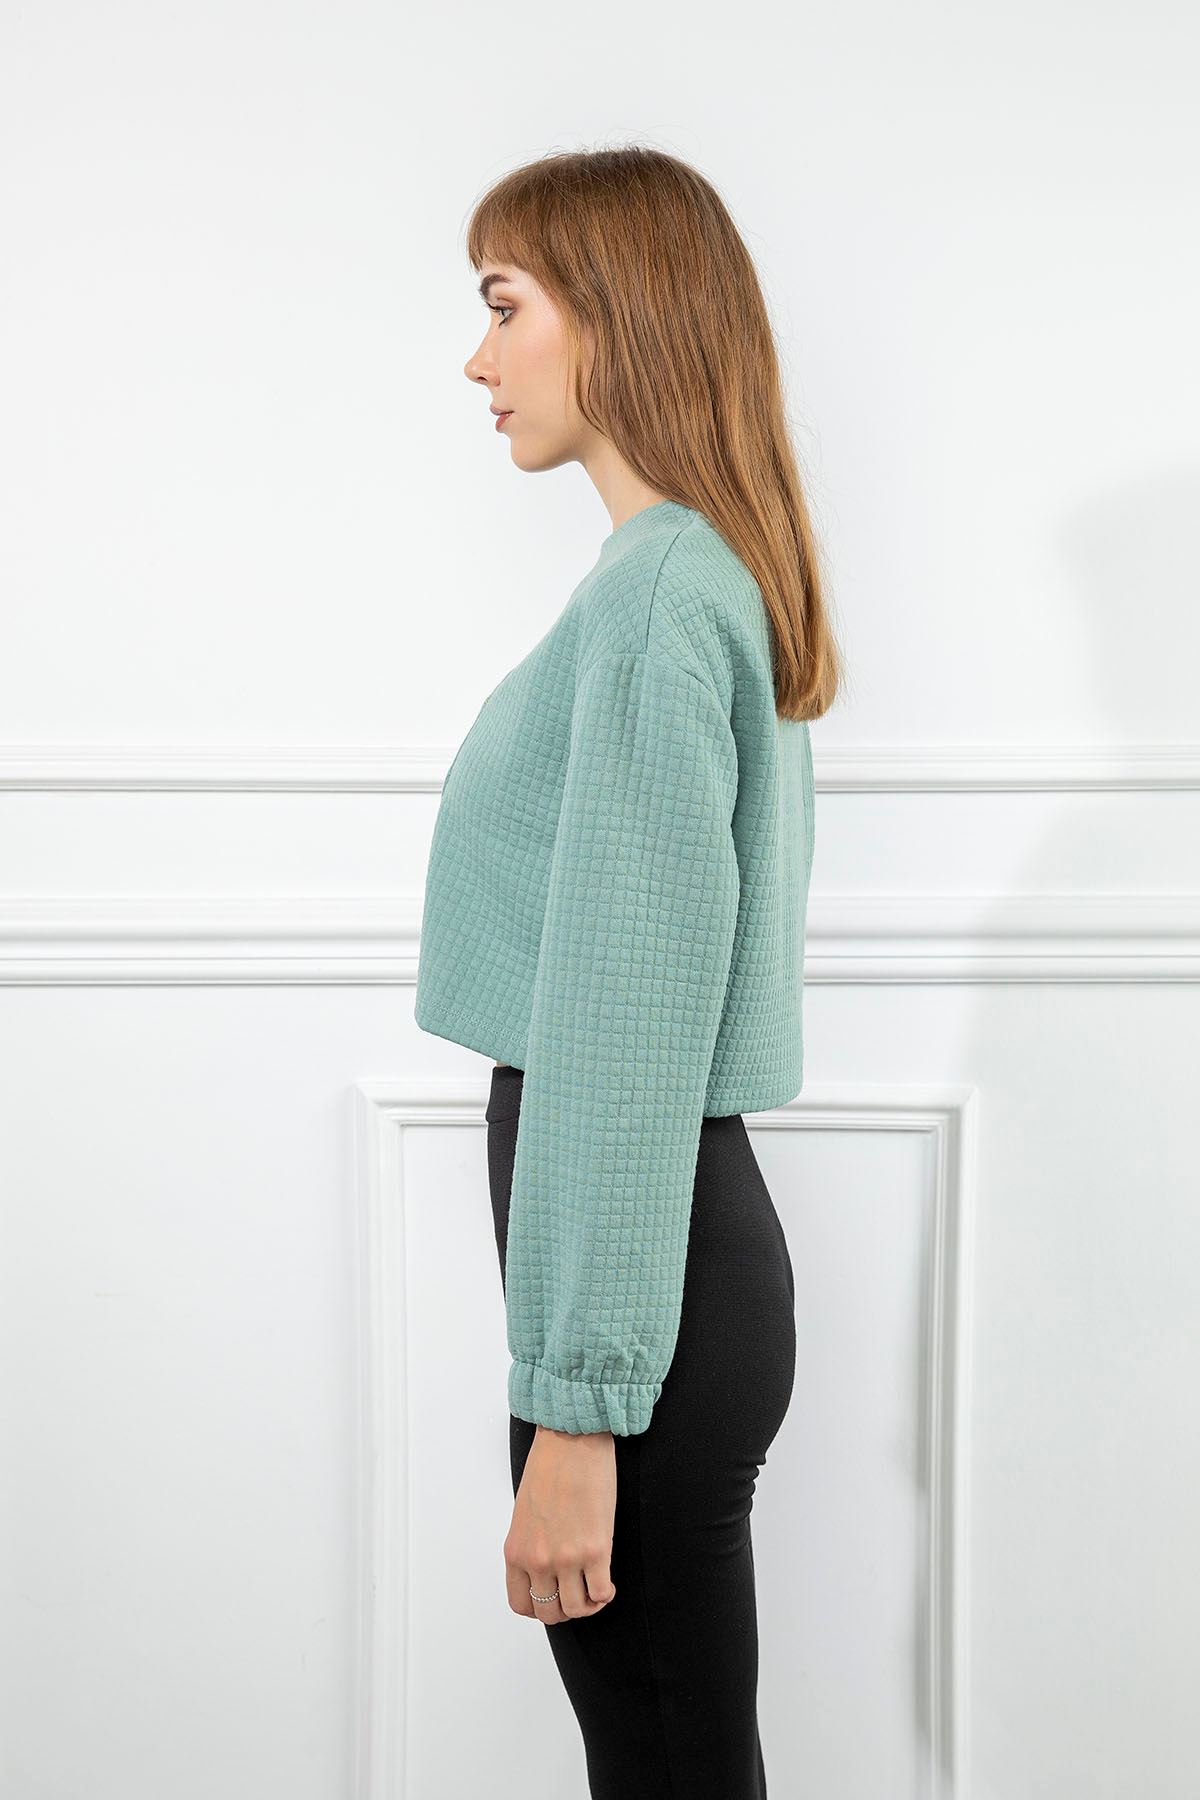 Honeycomb Fabric Long Sleeve Oversize Pocket Detailed Women Sweatshirt - Mint